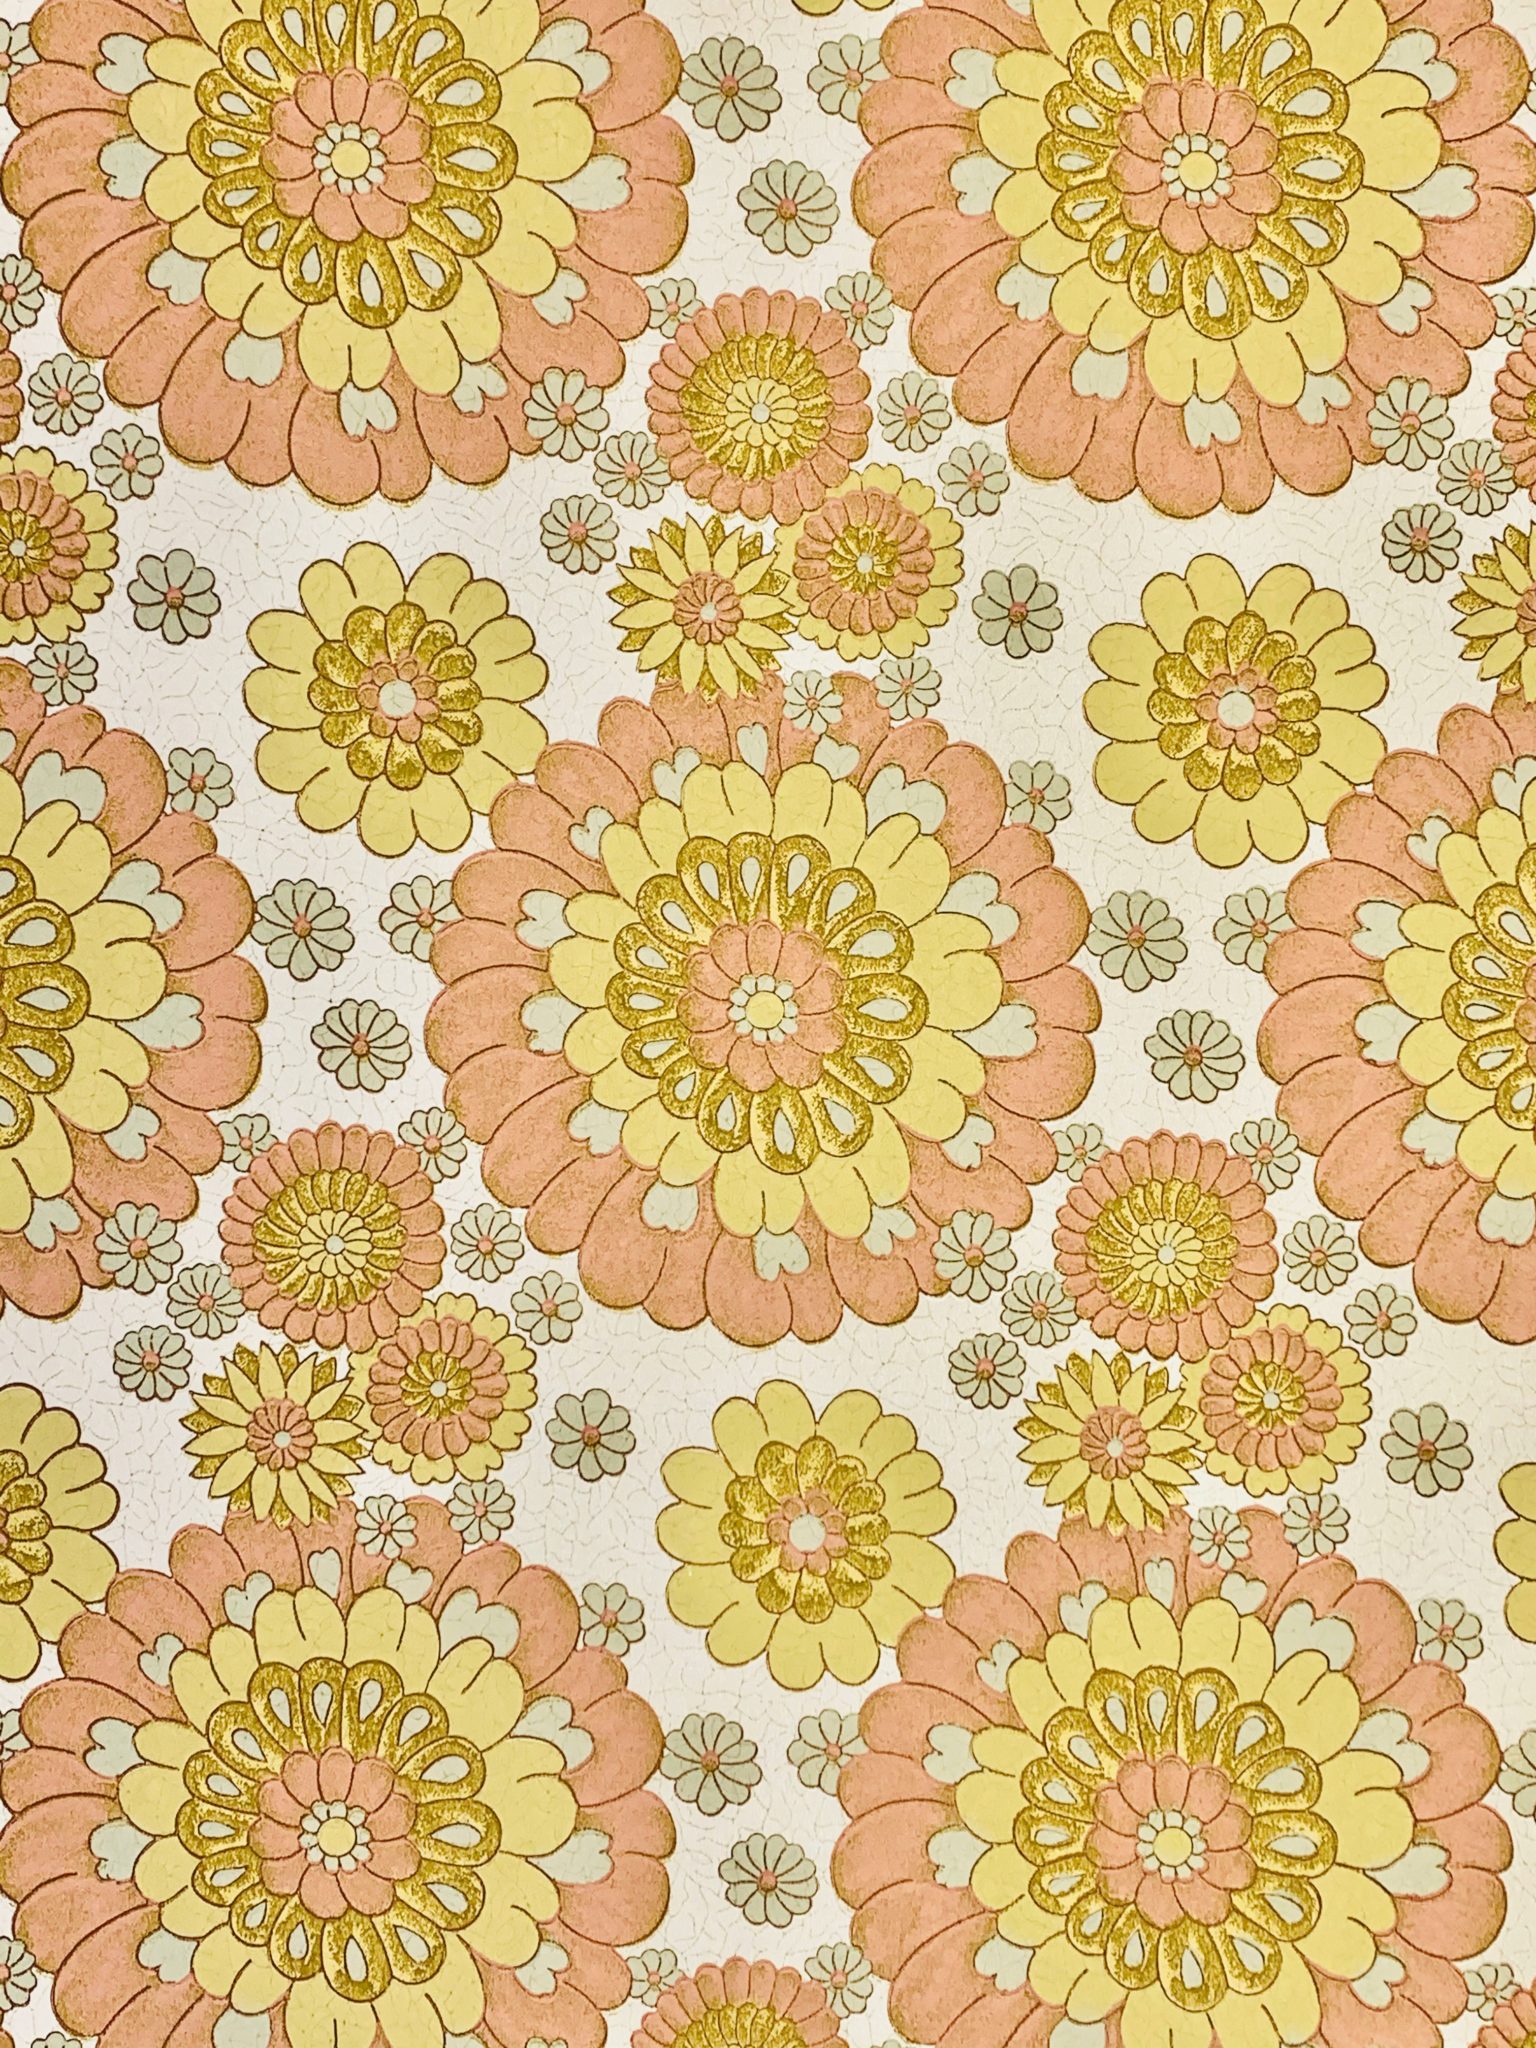 flower wallpaper,pattern,orange,yellow,floral design,rug